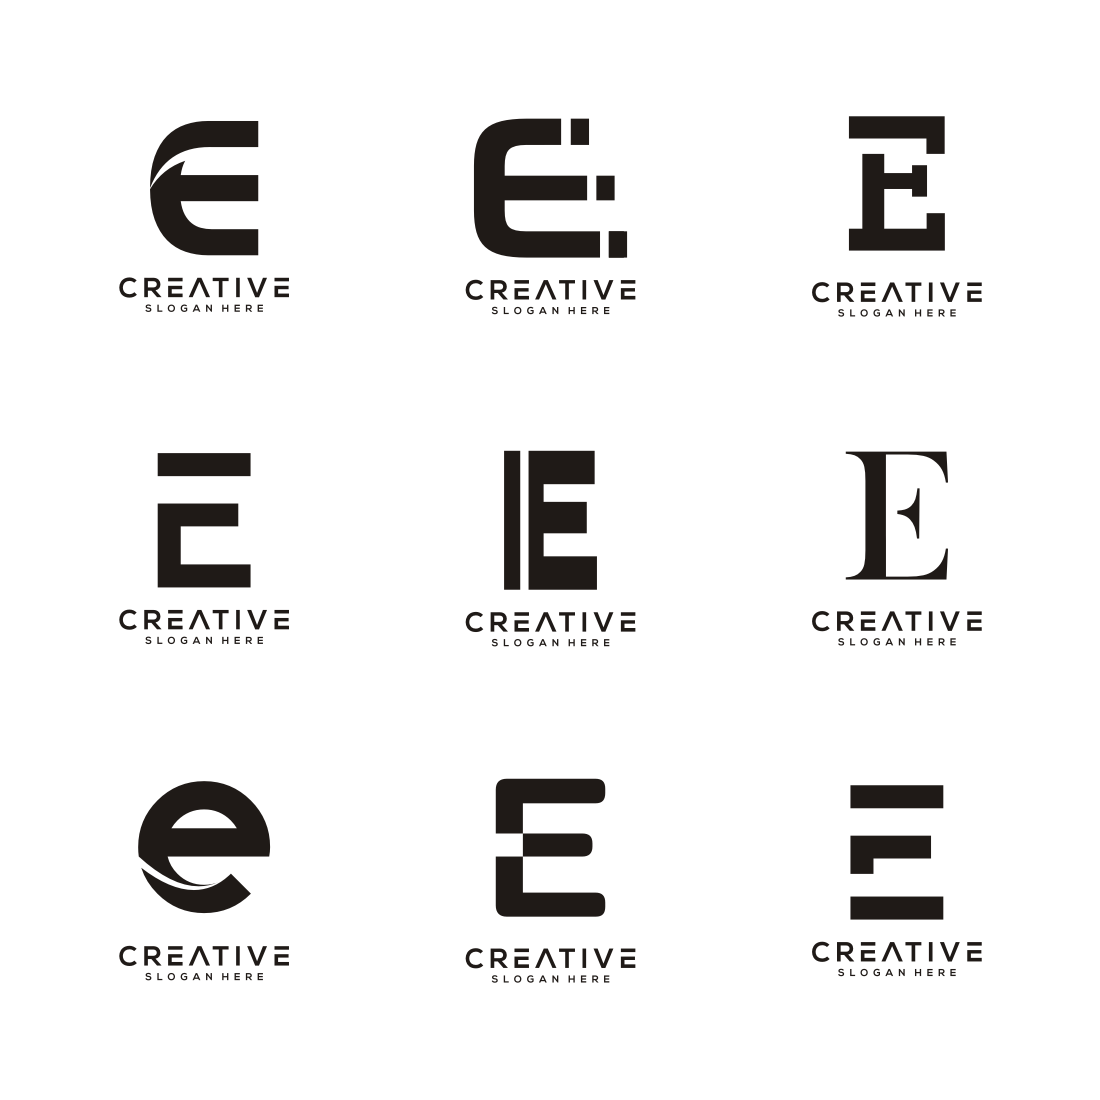 adobe illustrator logo vector